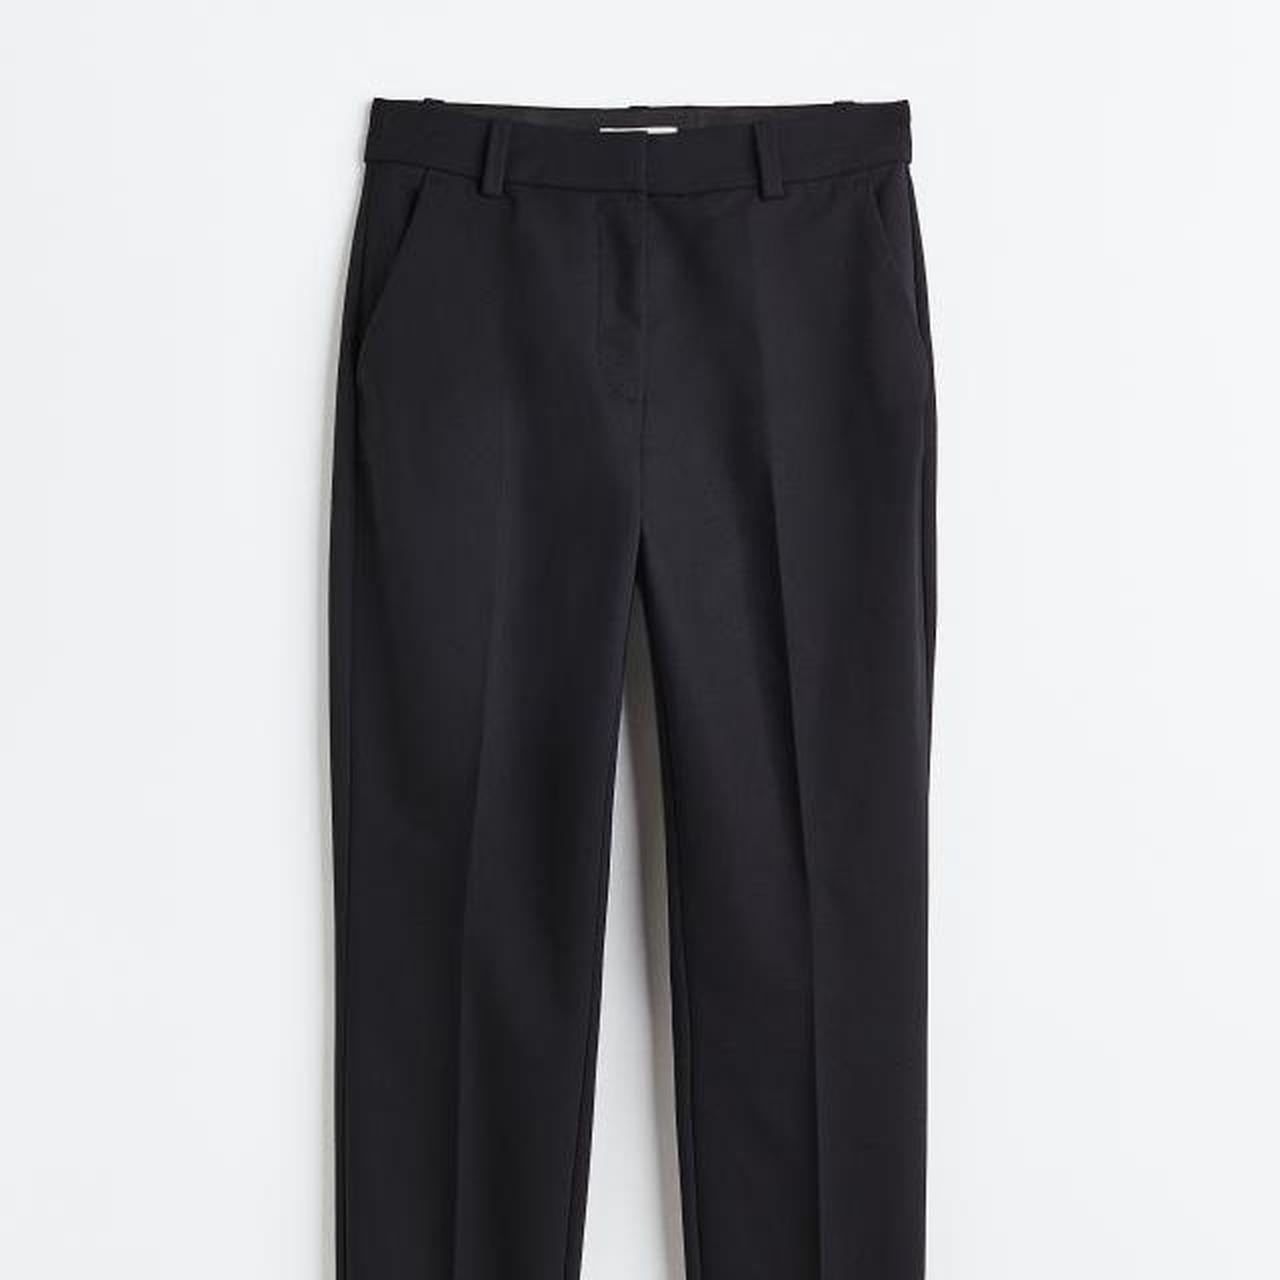 Pull-On Dress Pants - Black Straight Leg Pants | Jones New York